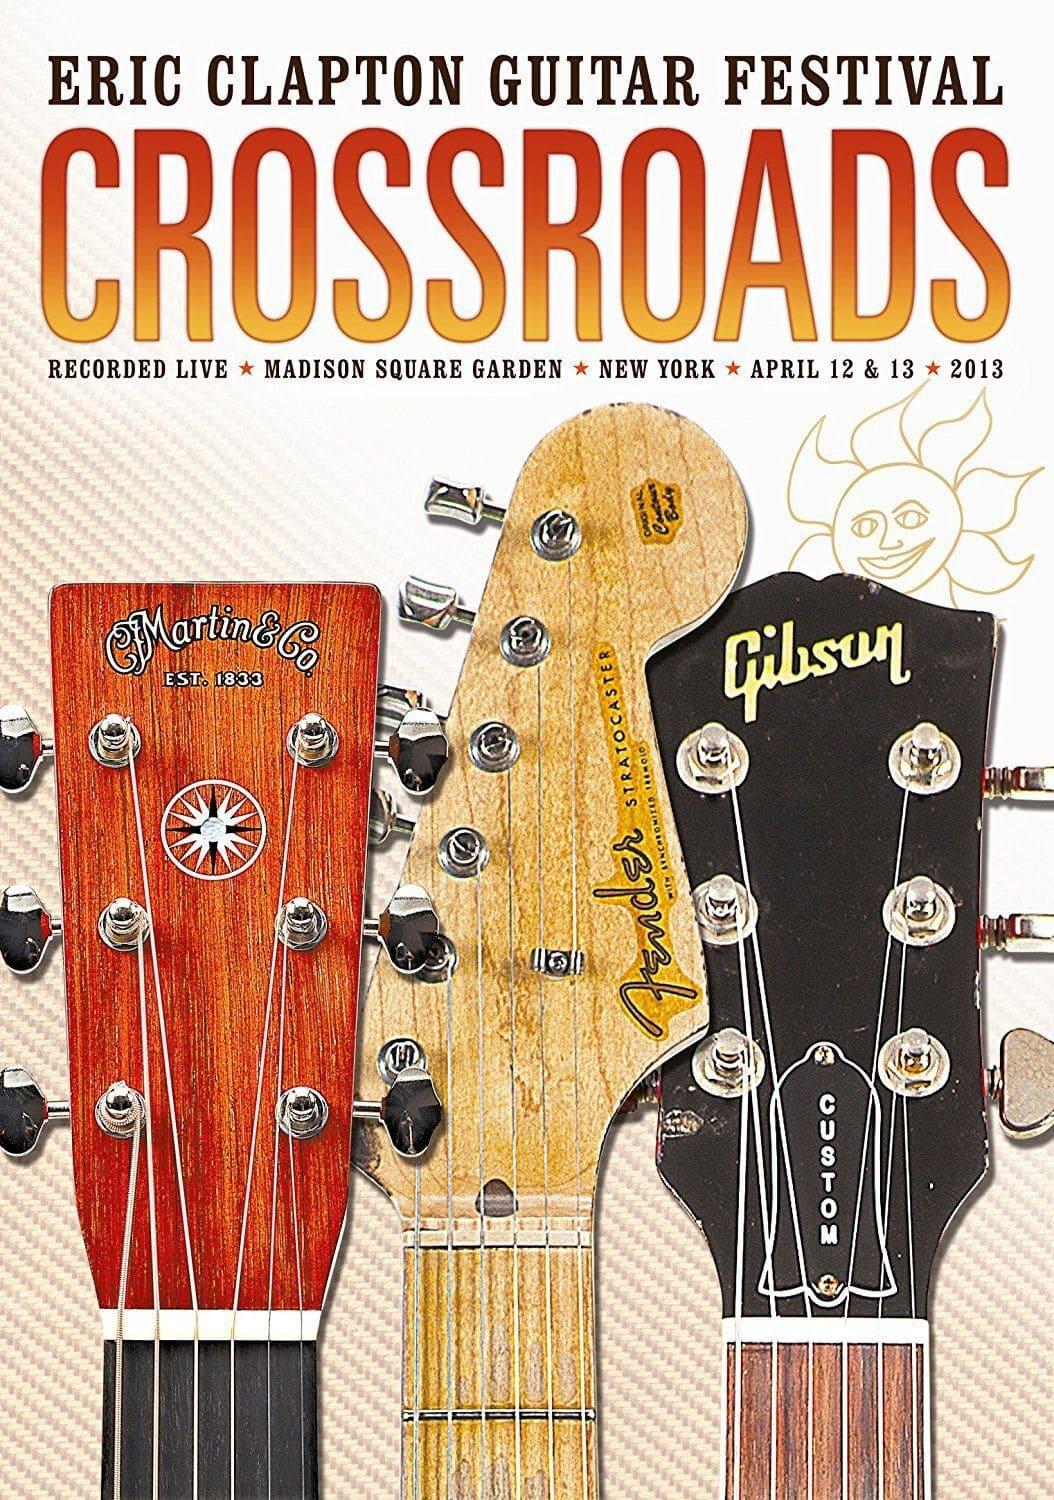 Eric Clapton's Crossroads Guitar Festival 2013 poster